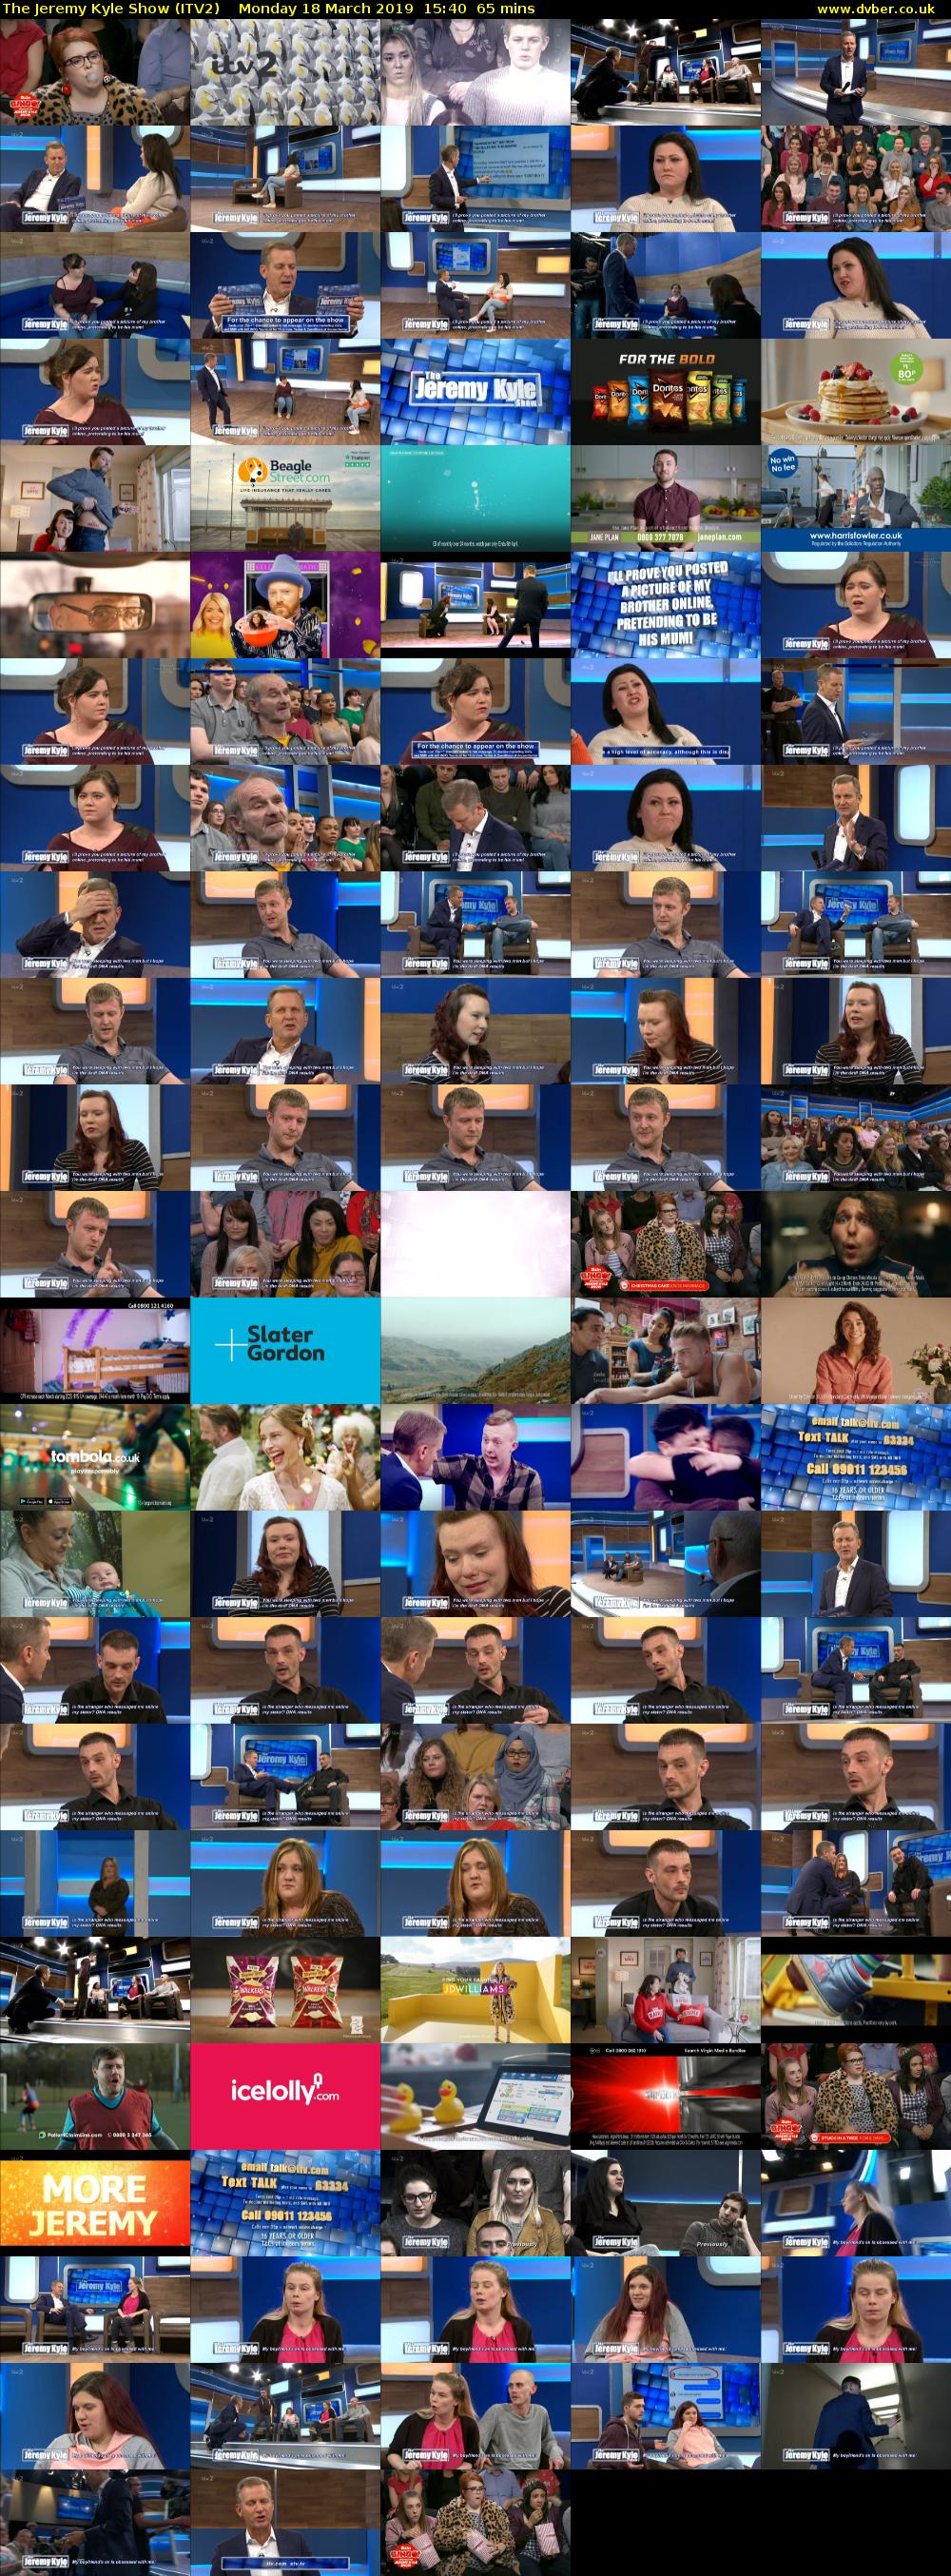 The Jeremy Kyle Show (ITV2) Monday 18 March 2019 15:40 - 16:45